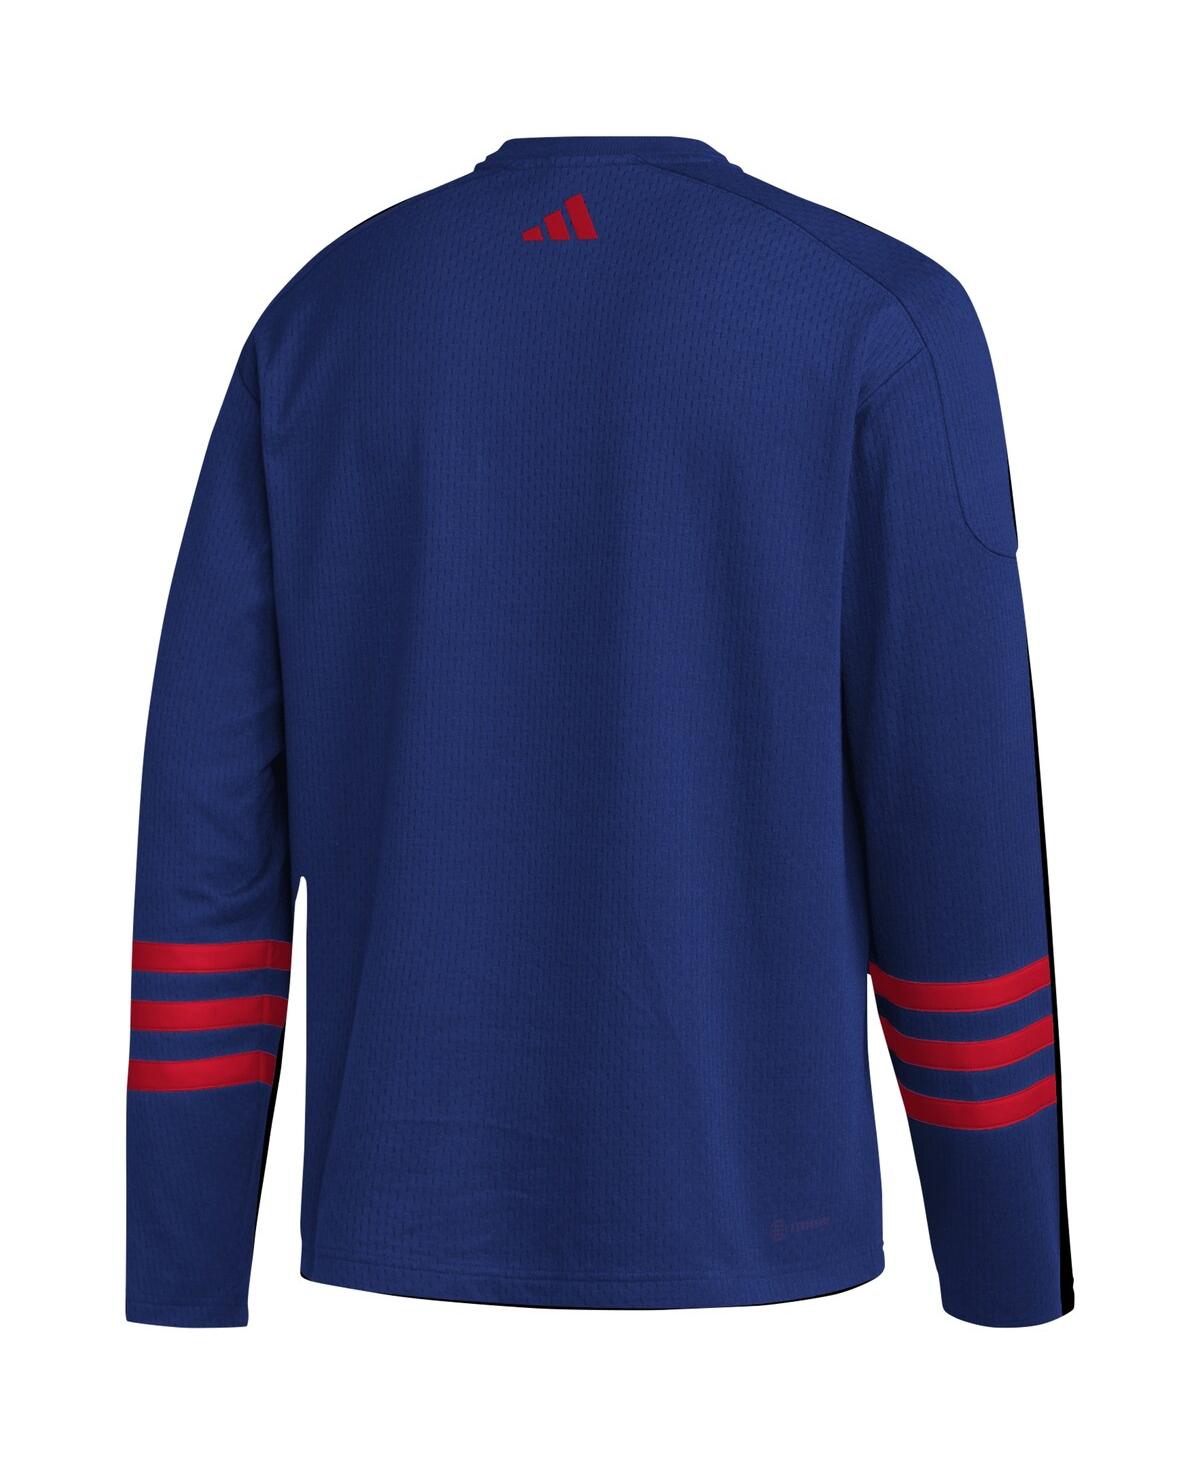 Shop Adidas Originals Men's Adidas Blue St. Louis Blues Aeroreadyâ Pullover Sweater